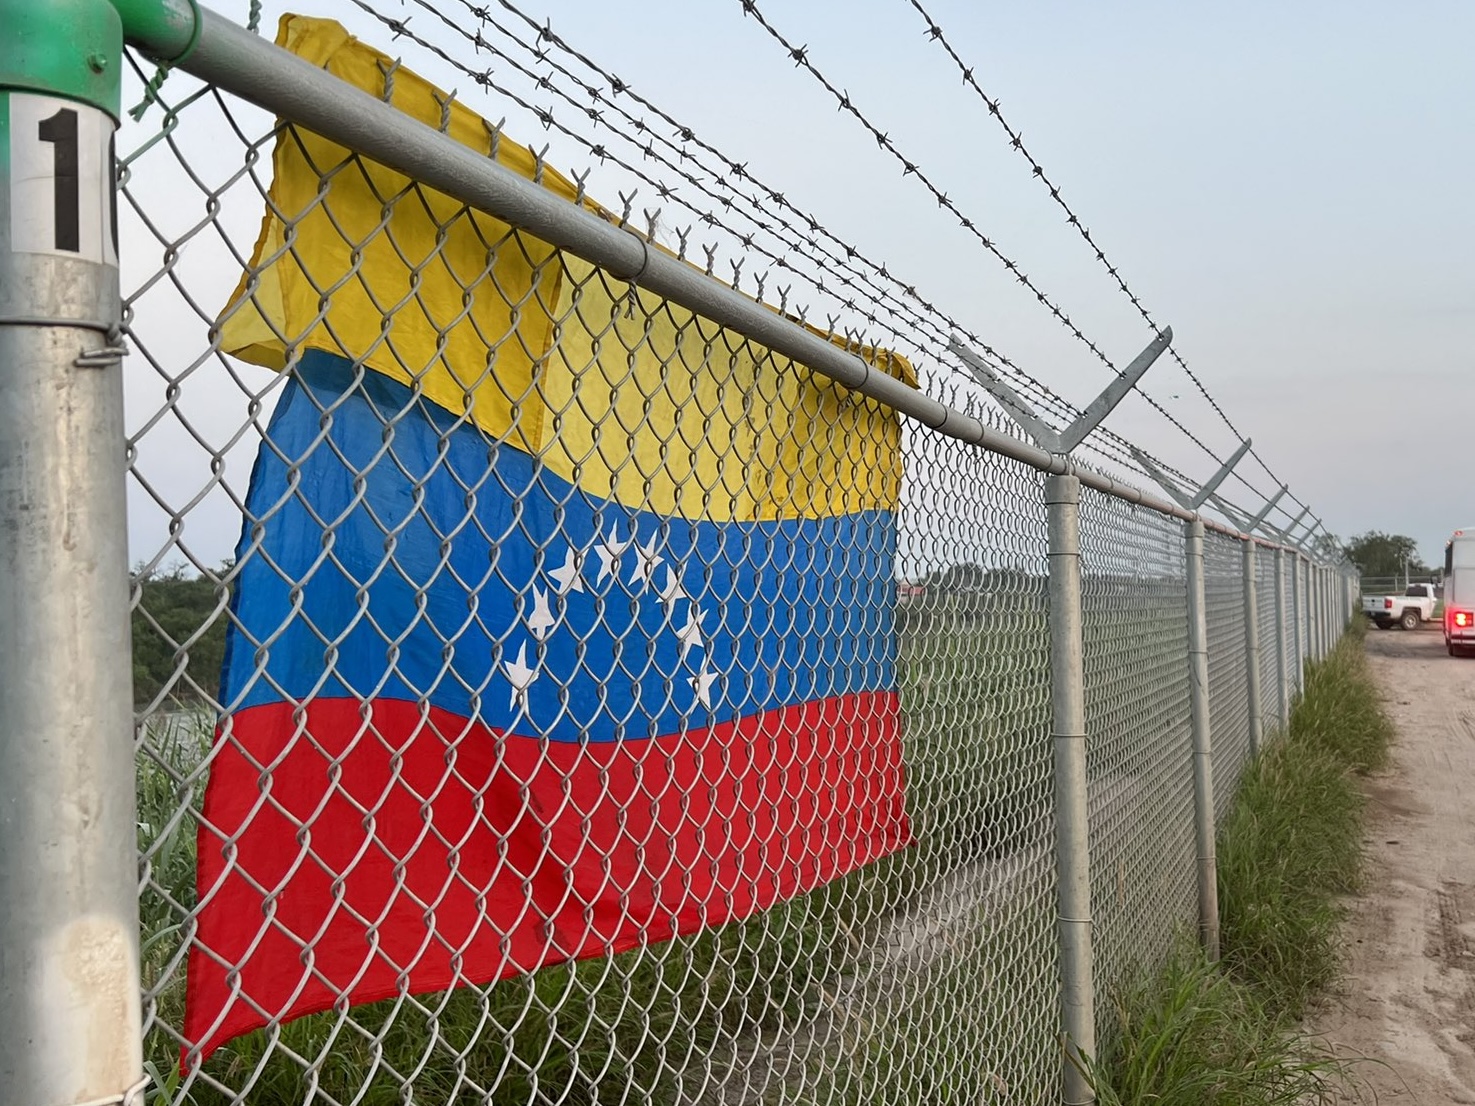 Venezuela accuses U.S. of breaching Qatari-brokered agreement on lifting sanctions